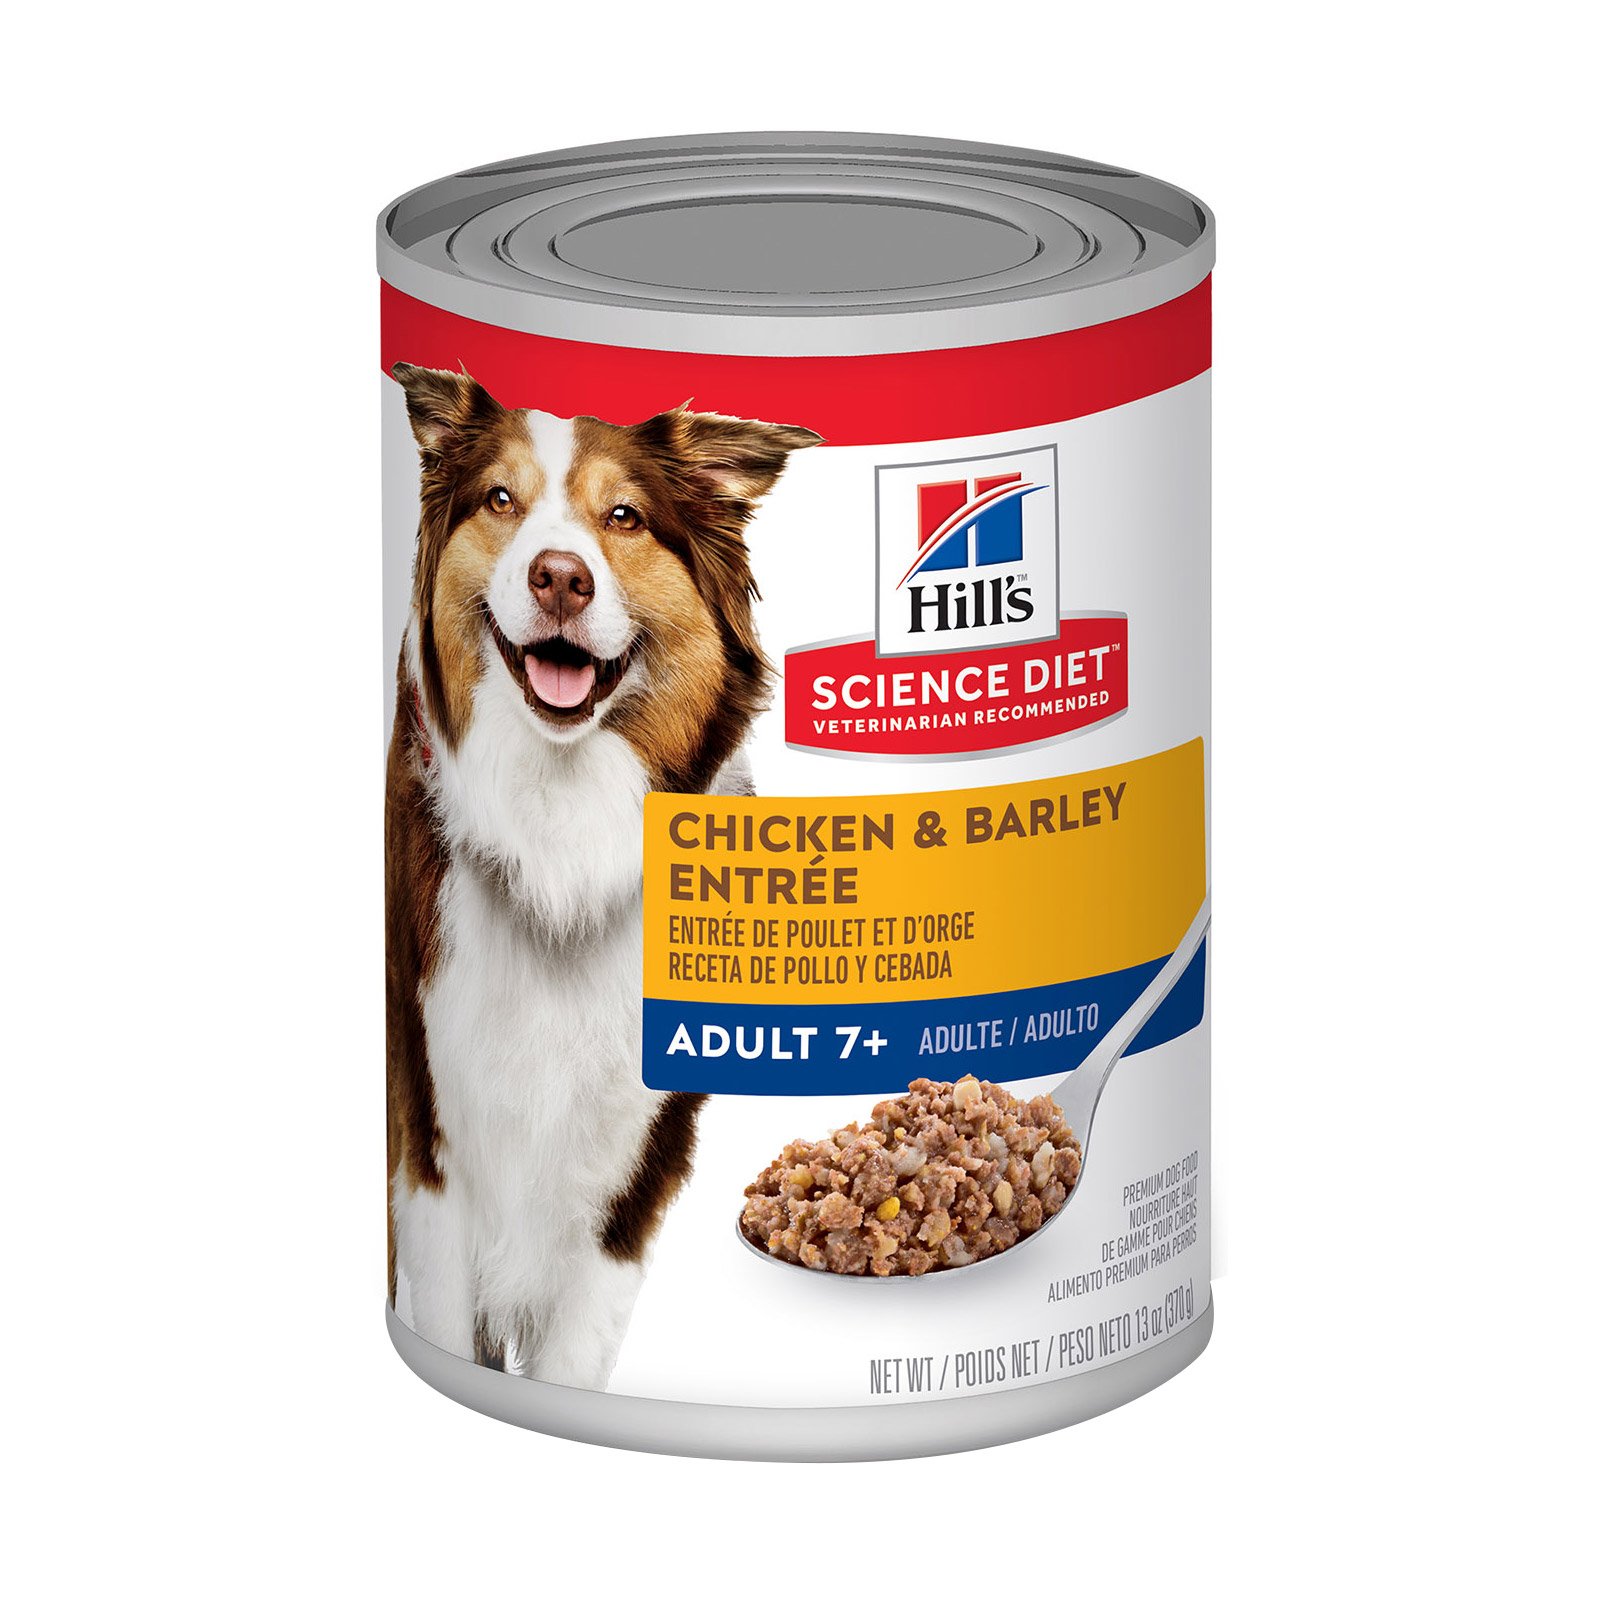 Hill's Science Diet Adult 7+ Chicken & Barley Entrée Senior Canned Dog Food